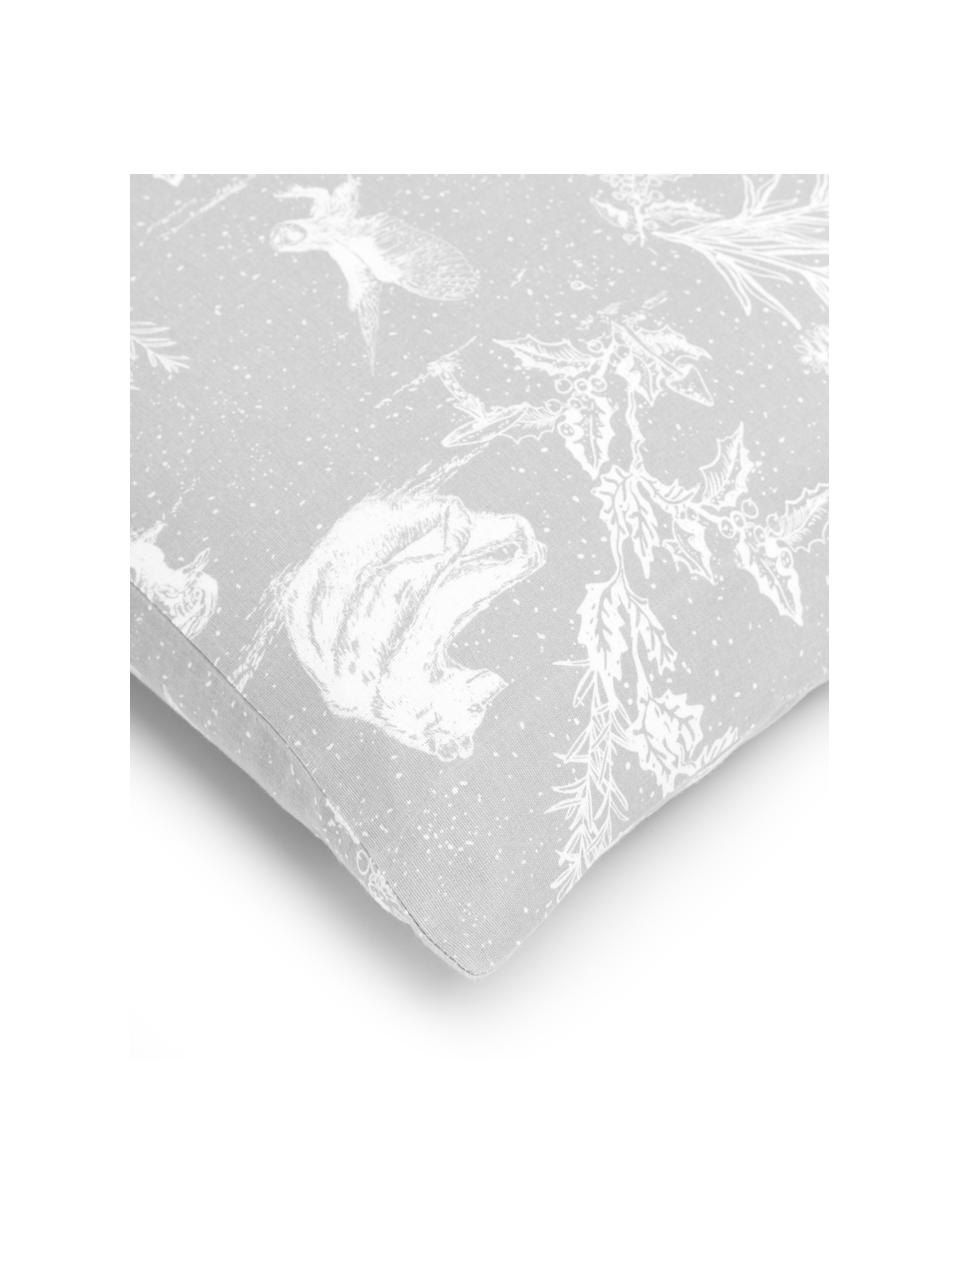 Flanell-Kissenbezüge Animal Toile in Grau, 2 Stück, Webart: Flanell, Grau, 40 x 80 cm